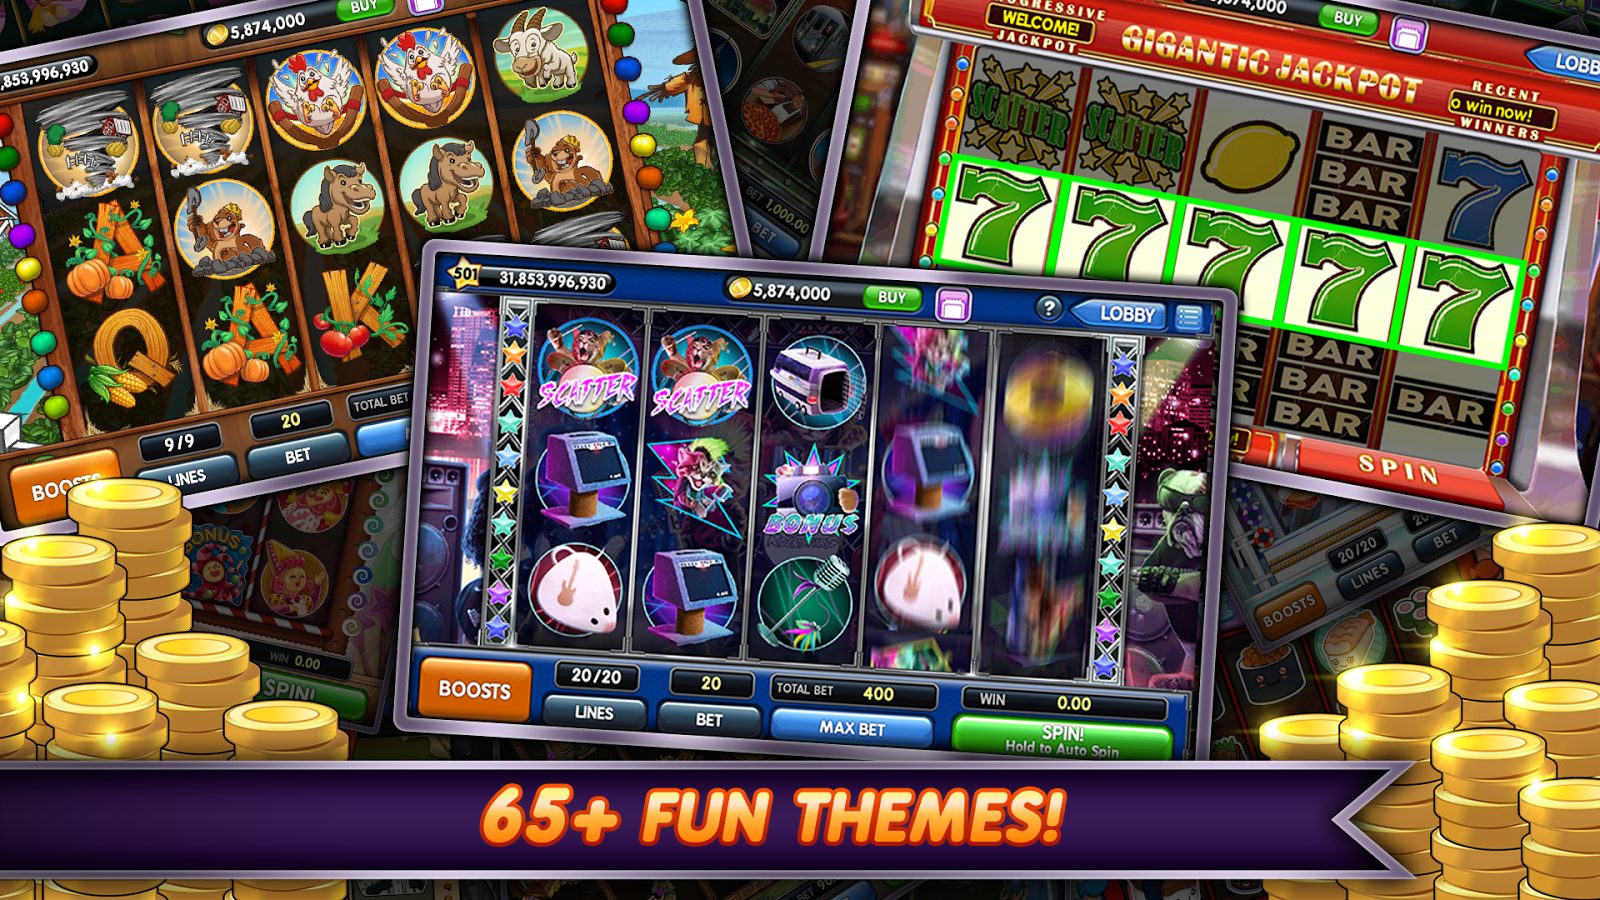 casino игровые автоматы онлайн